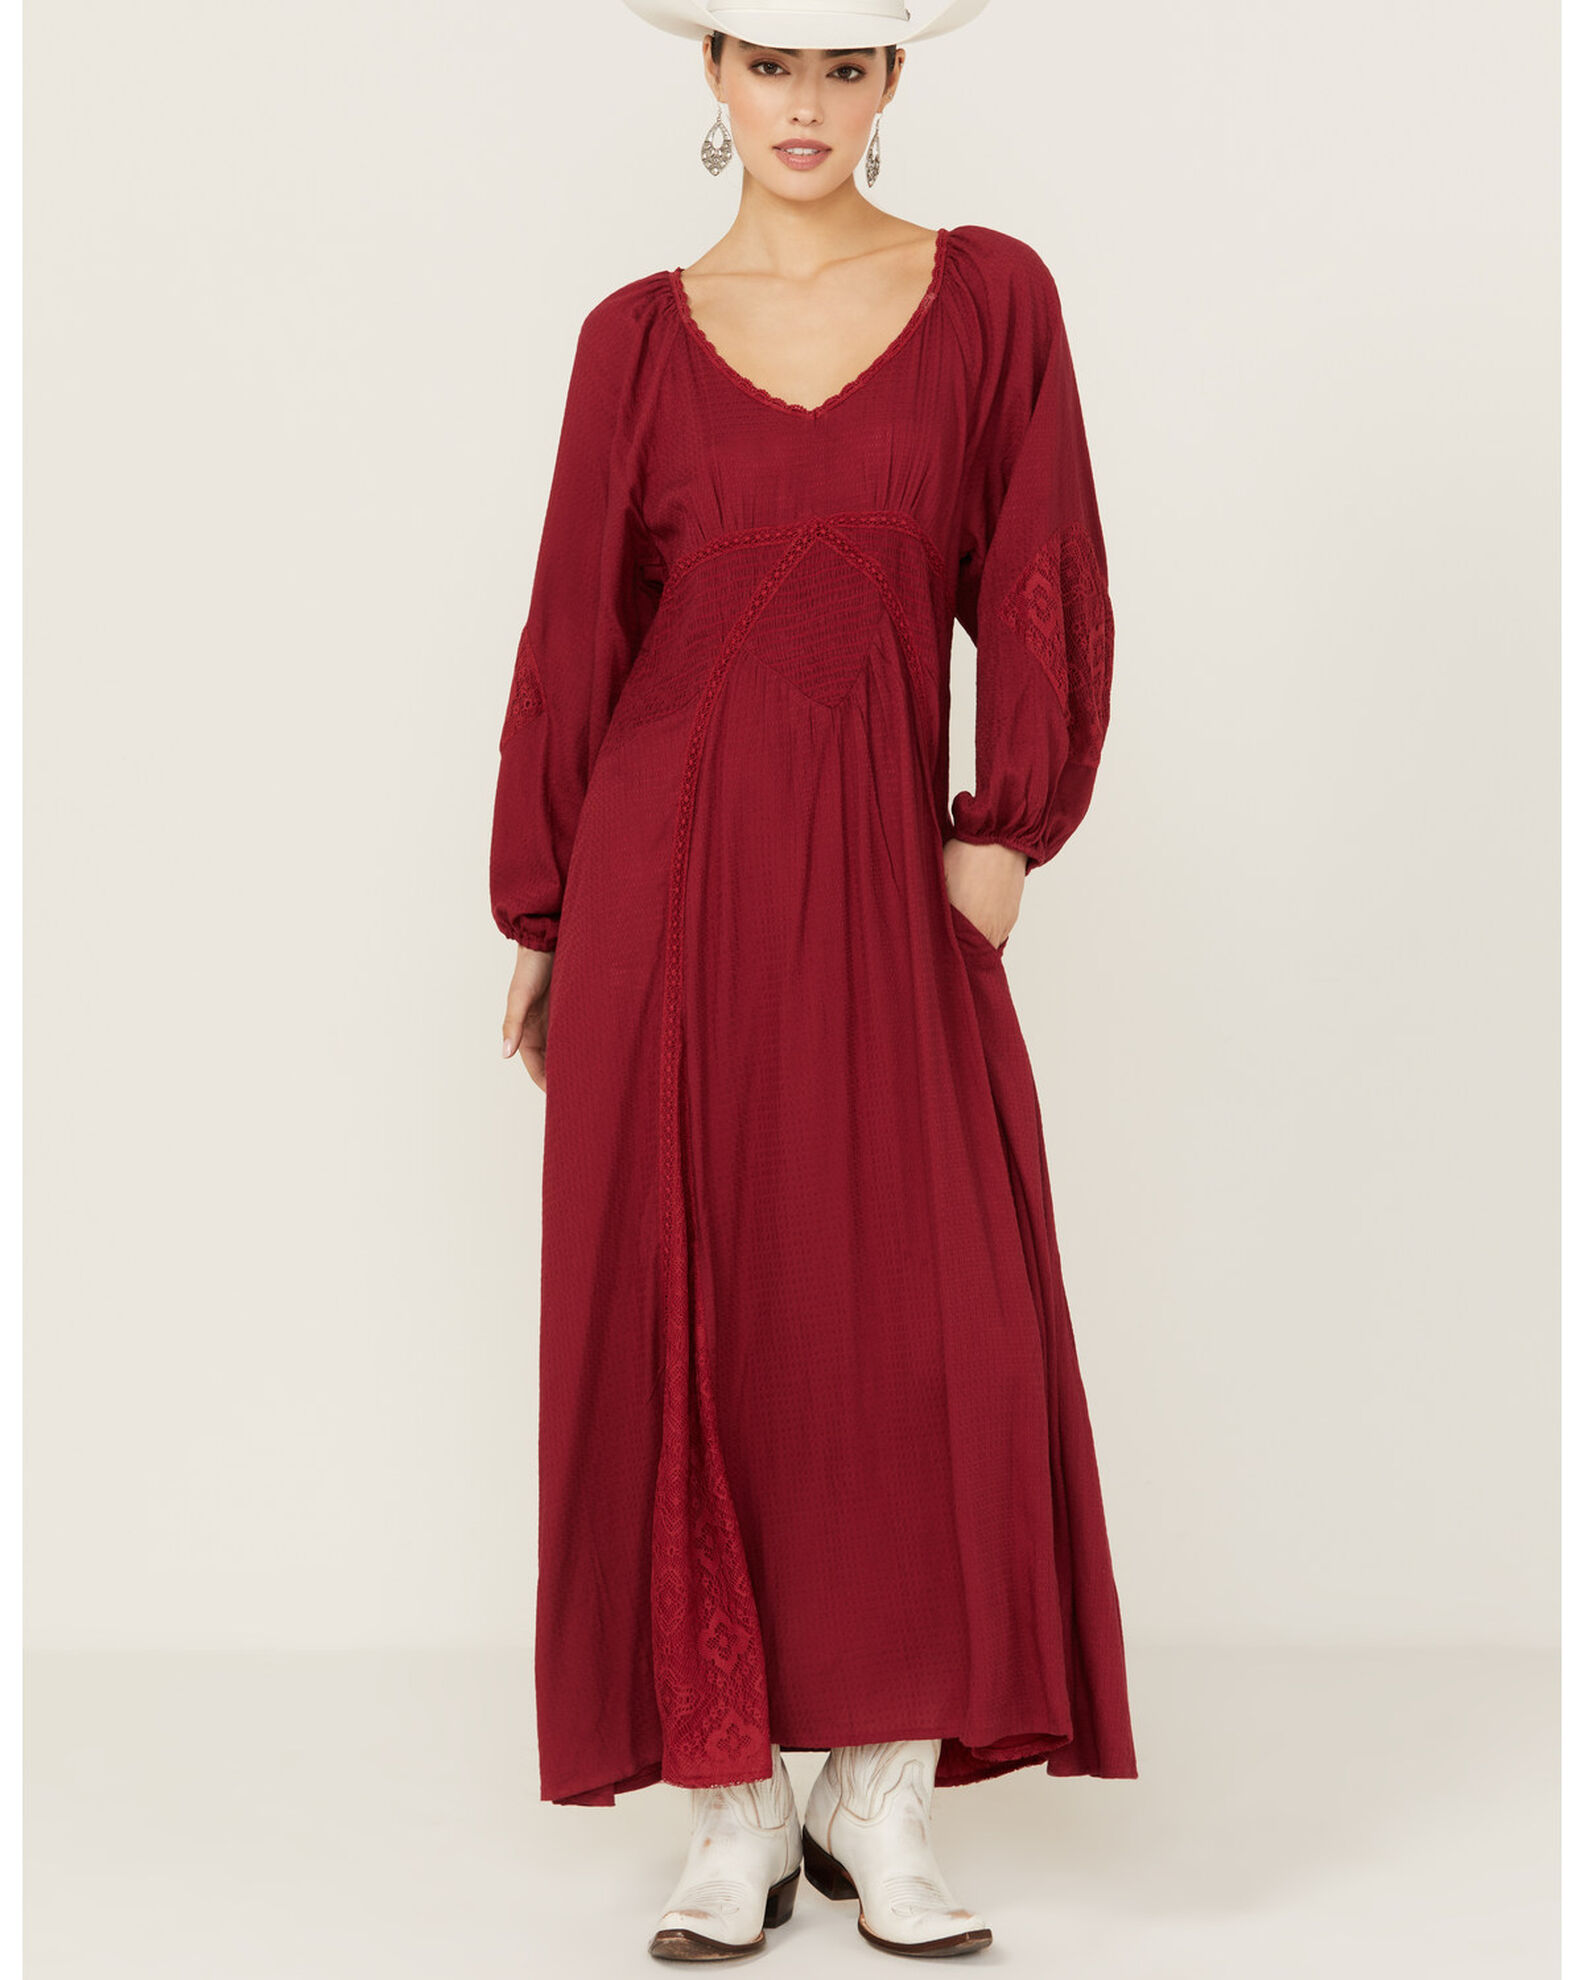 Gunit Solid Lace Women's Long Sleeve Maxi Dress